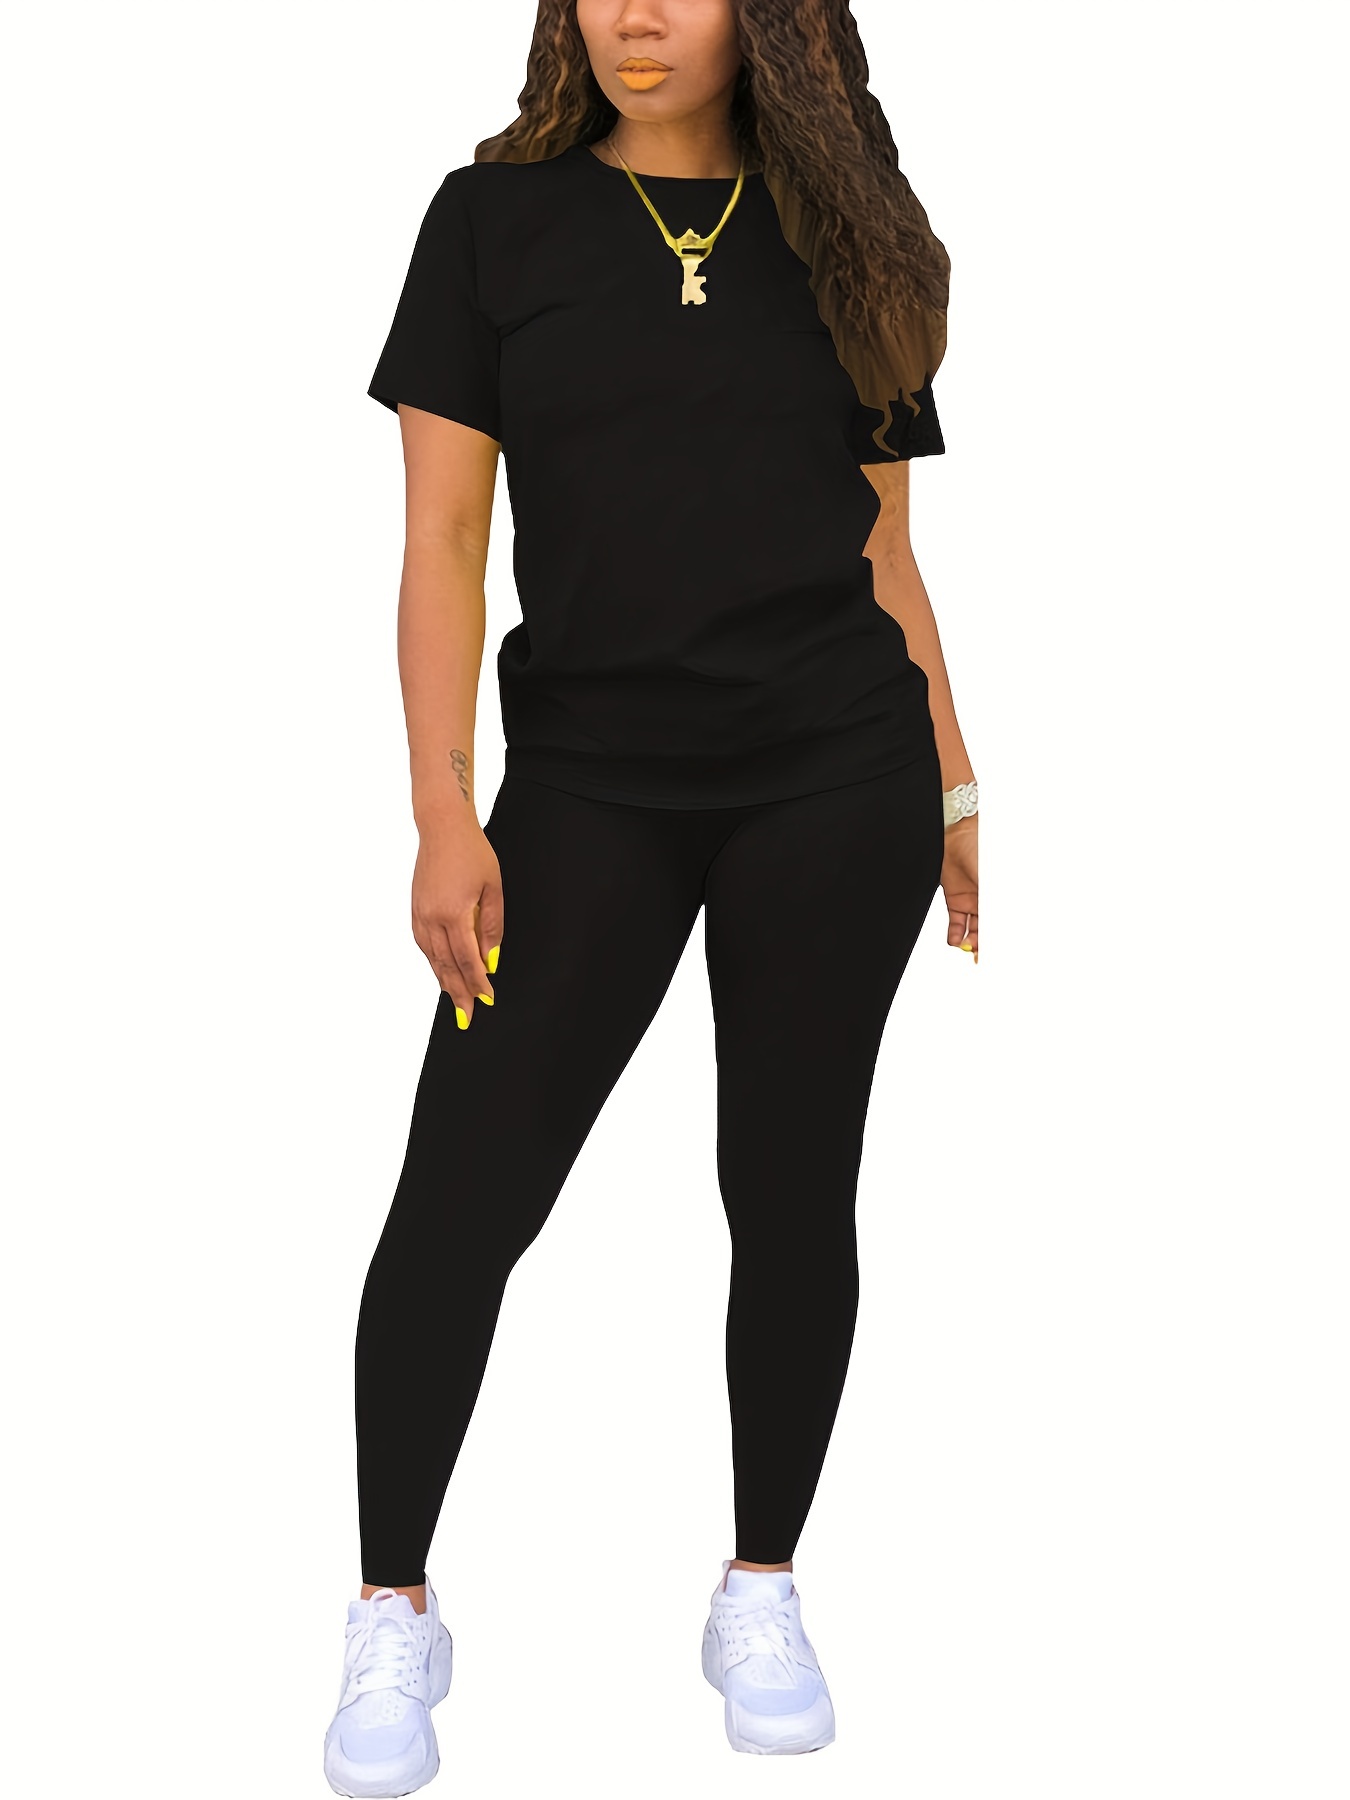  Ecirod 2 Piece Shorts Set for Women Casual Outfits Irregular  High Slit One Shoulder Shirt Short Leggings Black : Sports & Outdoors